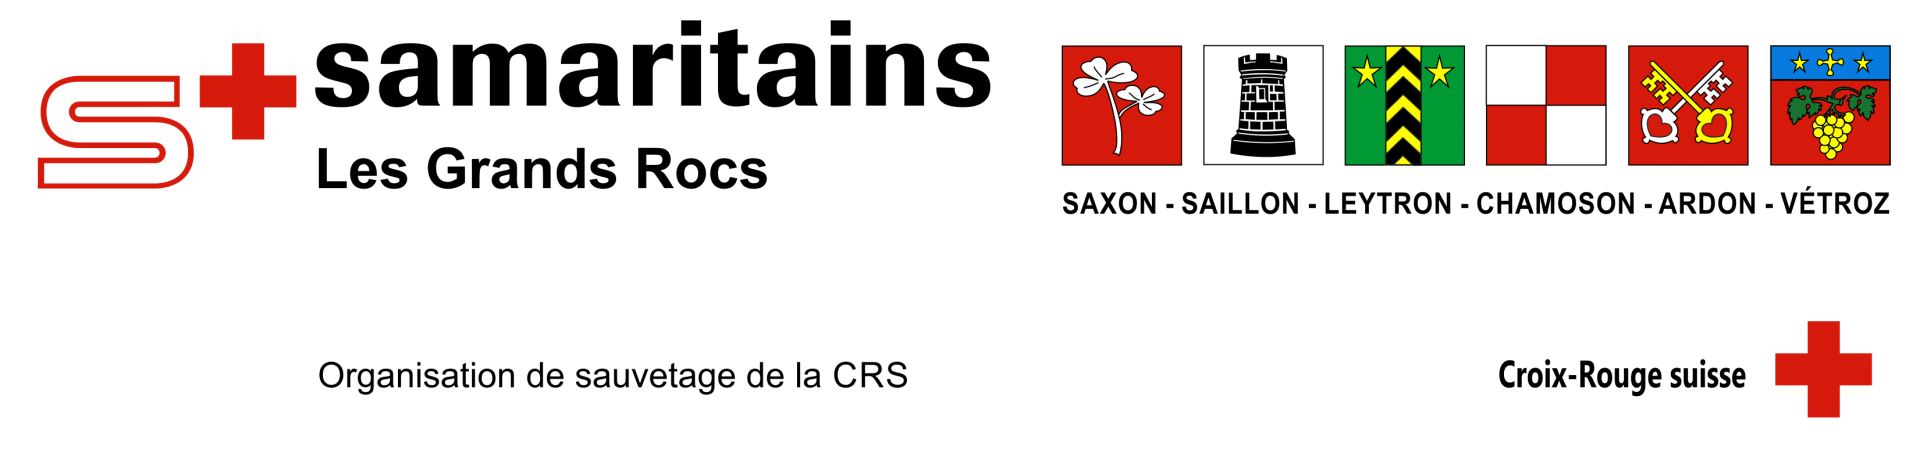 Logo lgr 2020 entete site